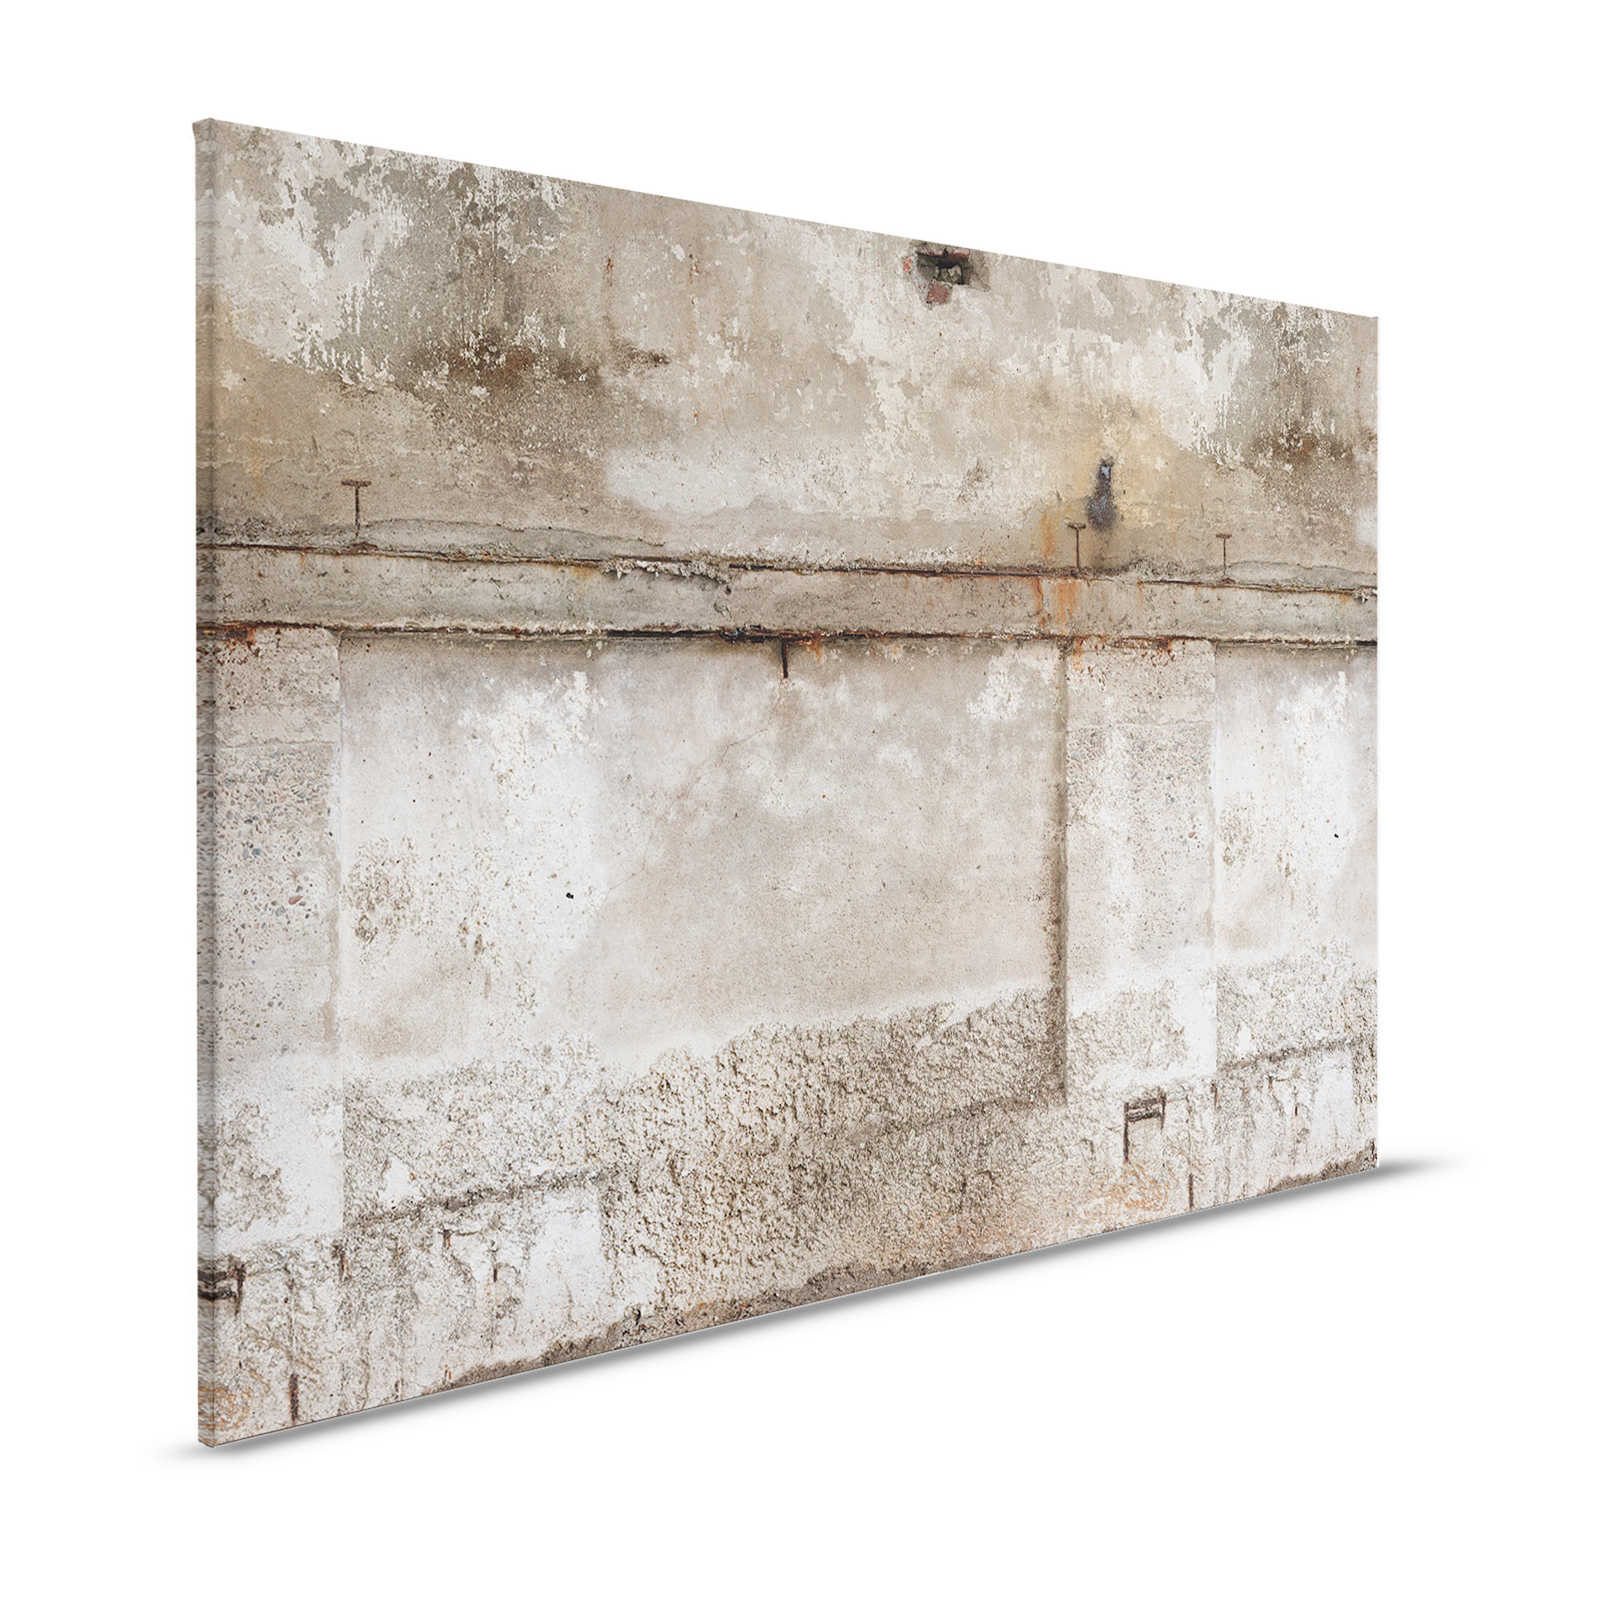 Concrete Industrial Style Canvas Painting - 1.20 m x 0.80 m
